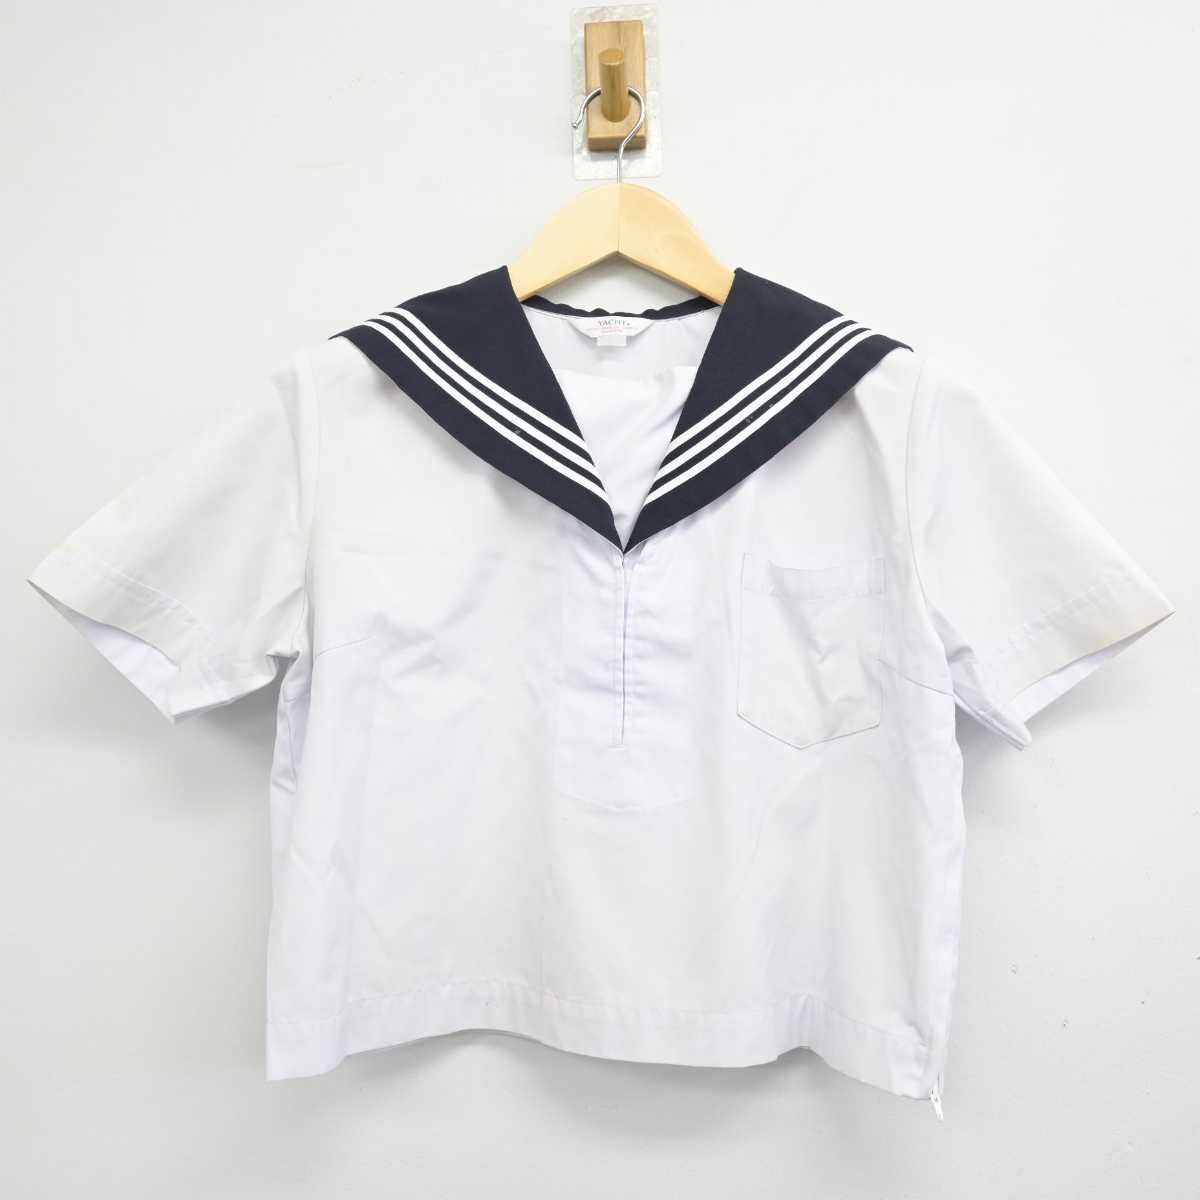 【中古】香川県 桜町中学校 女子制服 4点 (セーラー服・スカート) sf051977